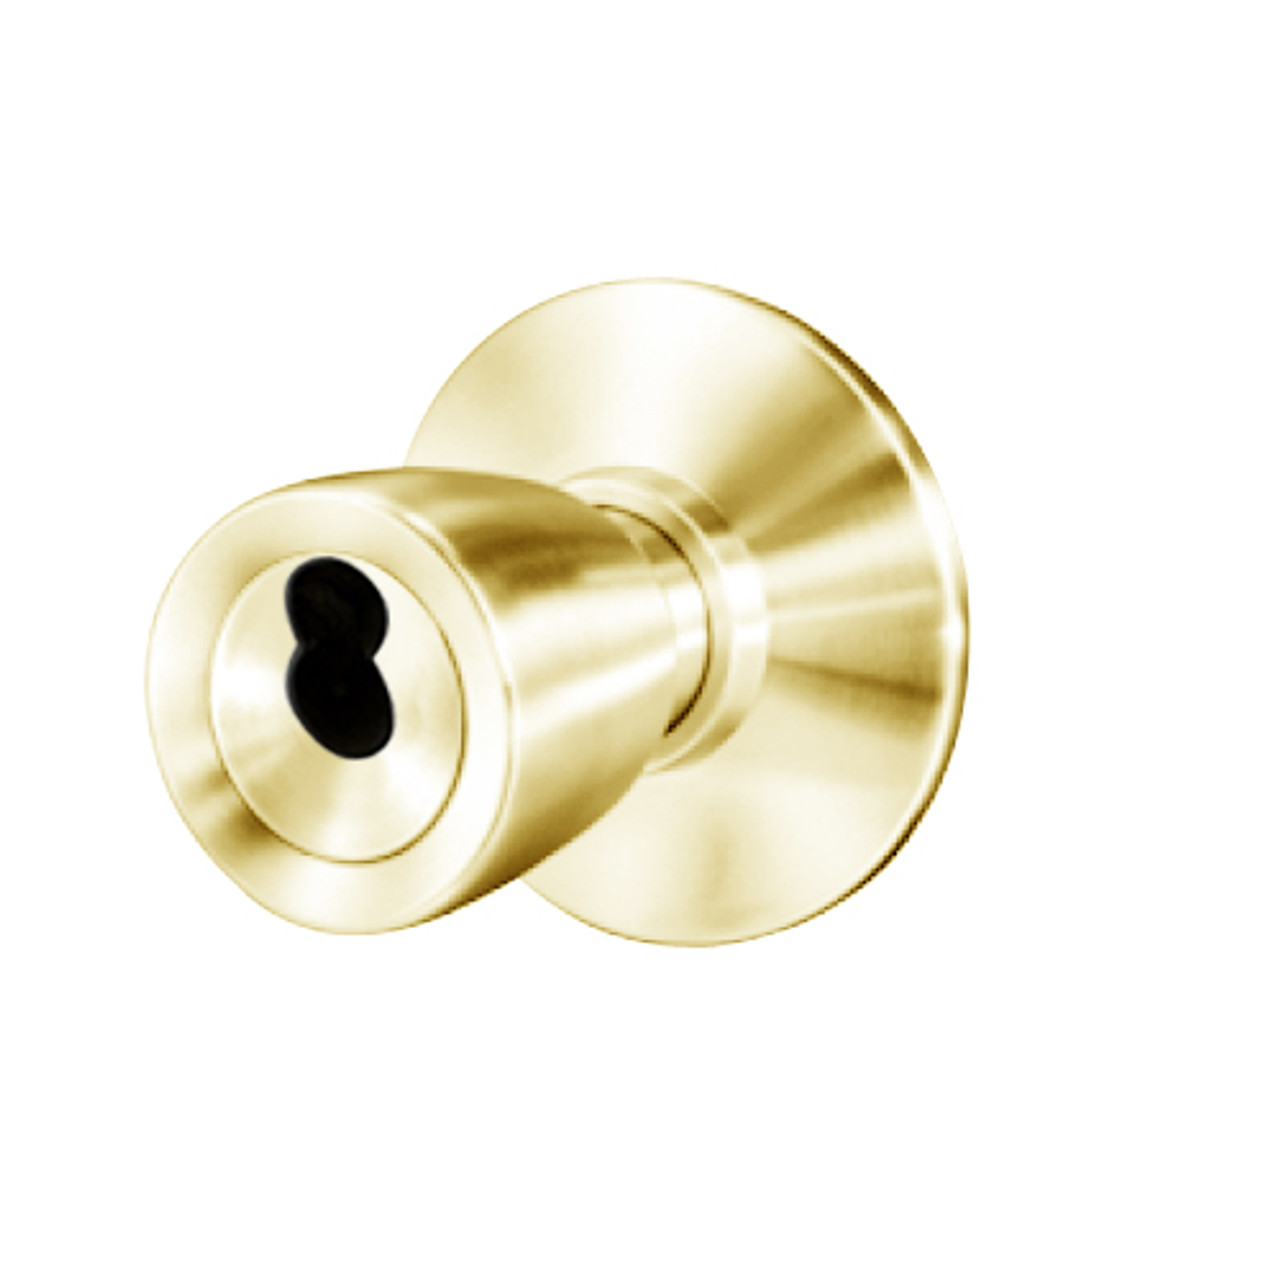 8K57W6DSTK605 Best 8K Series Institutional Heavy Duty Cylindrical Knob Locks with Tulip Style in Bright Brass